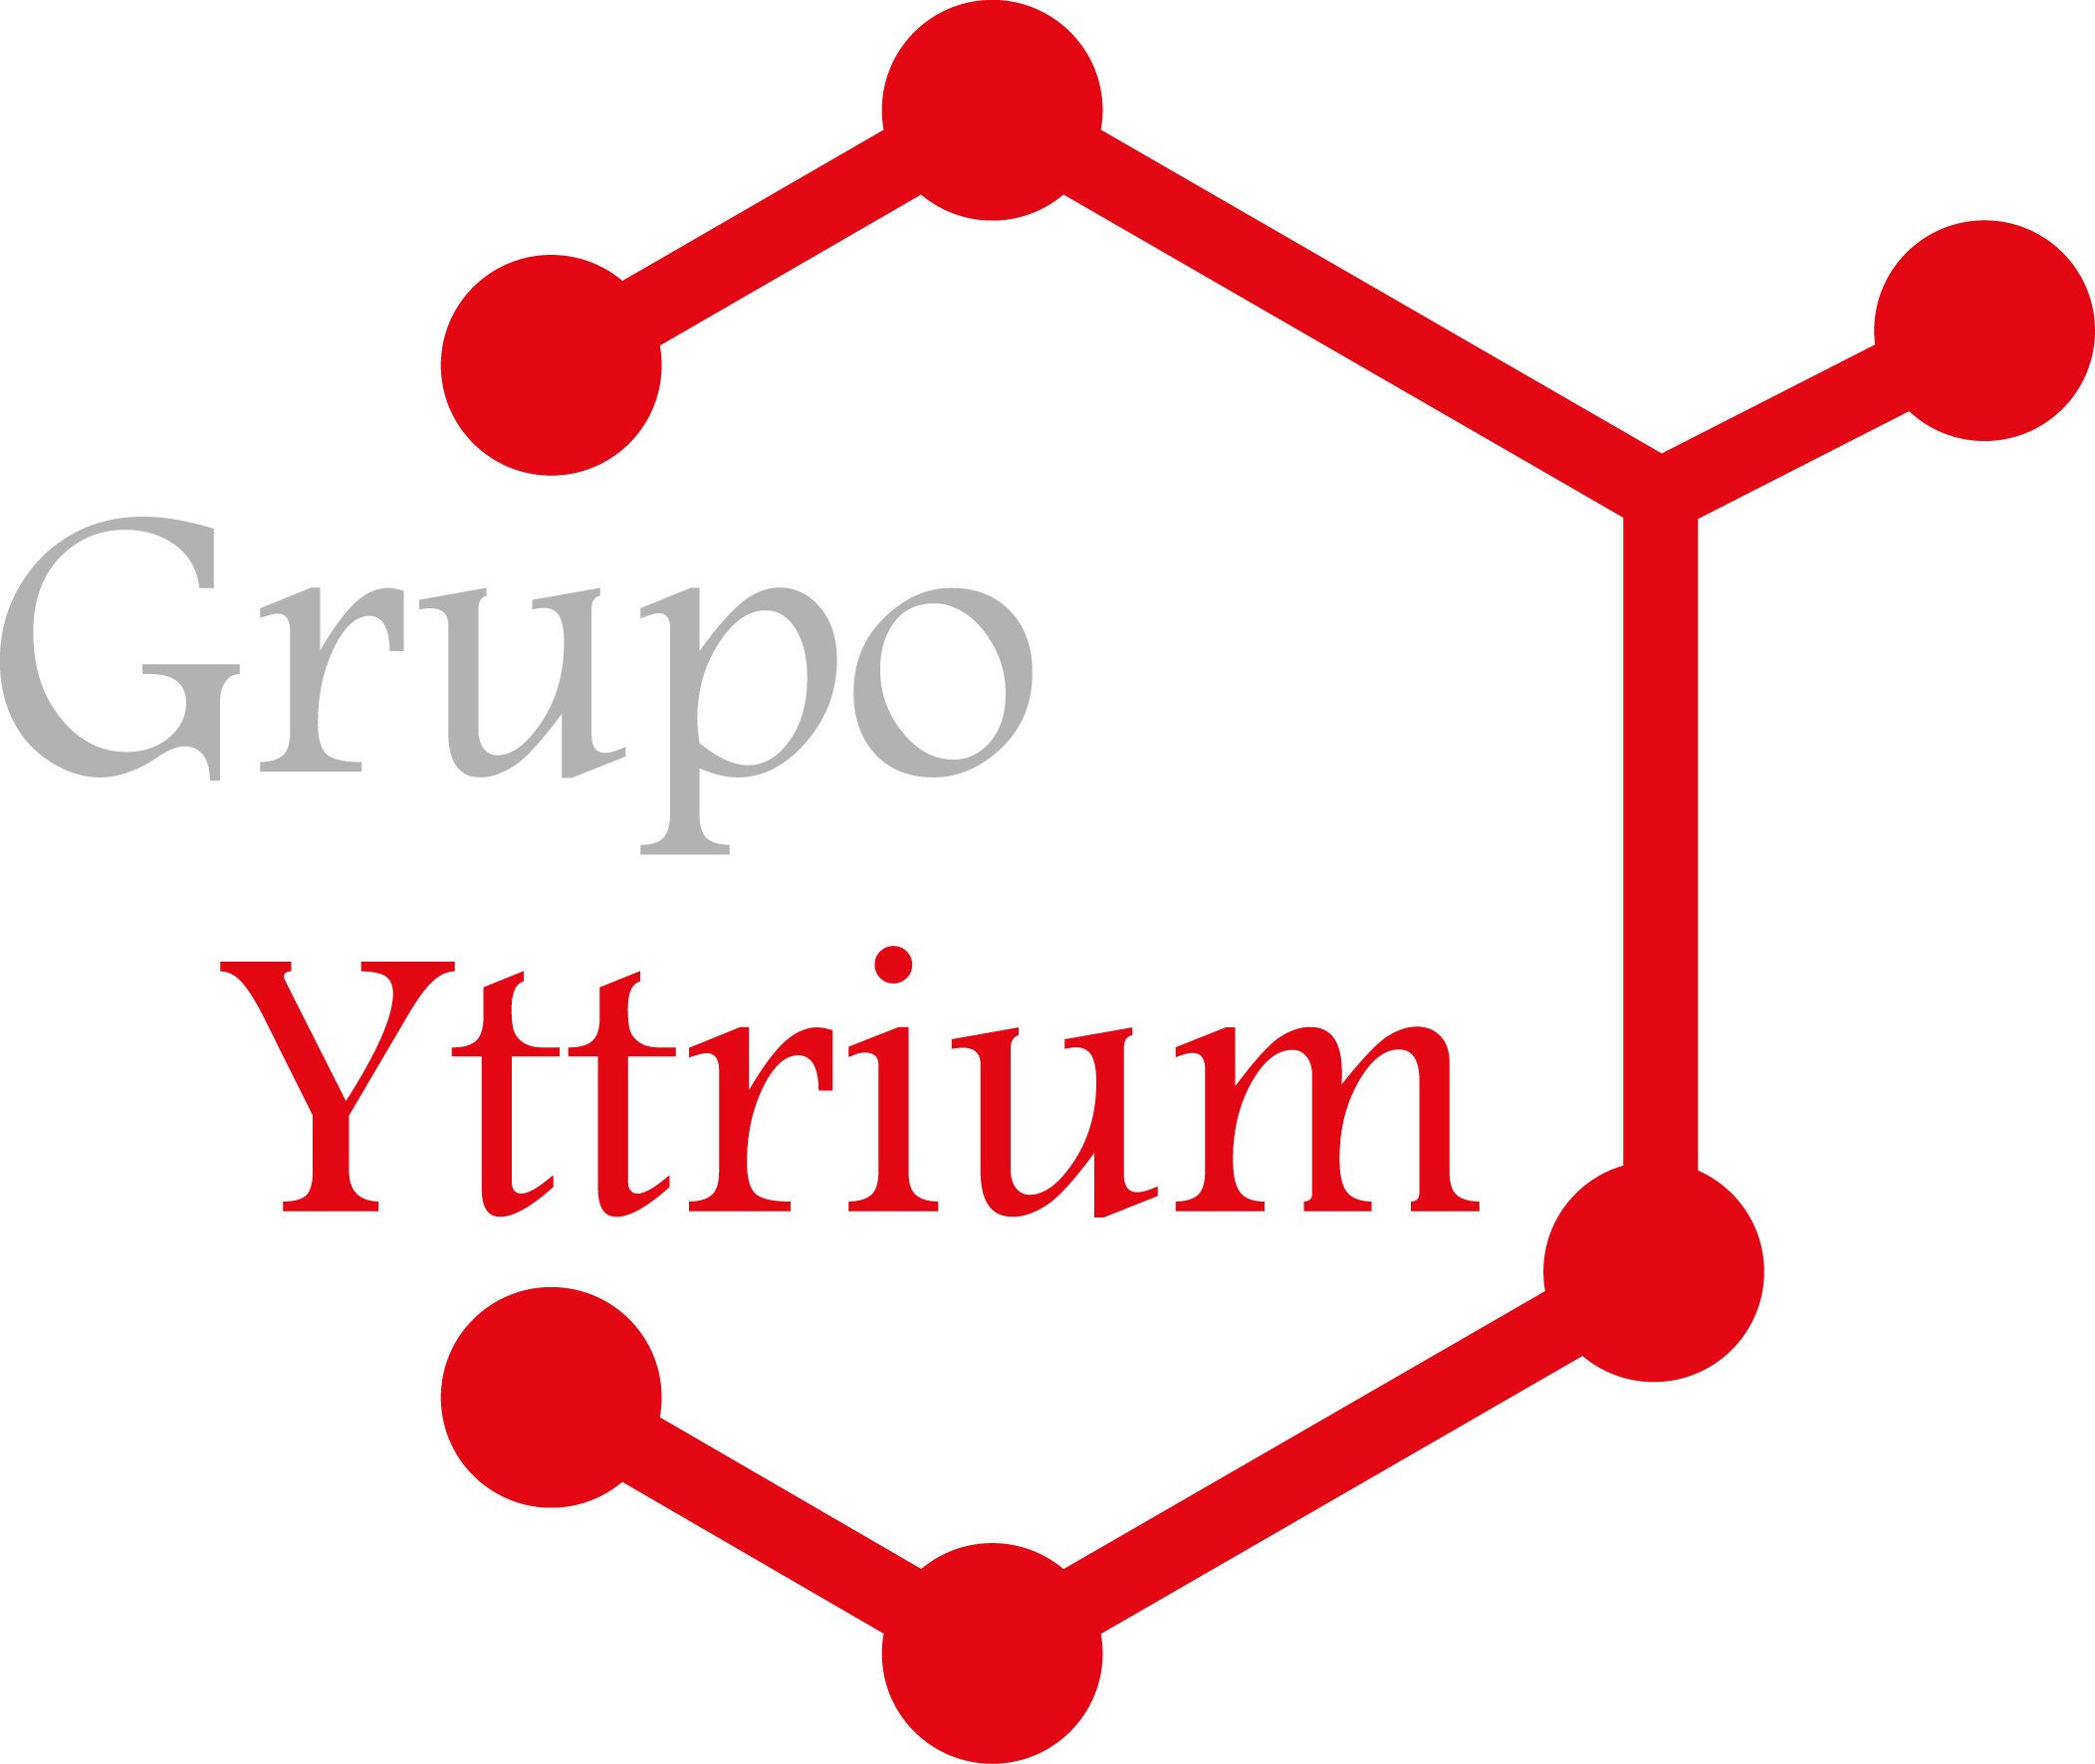 Grupo Yttrium profile on Qualified.One